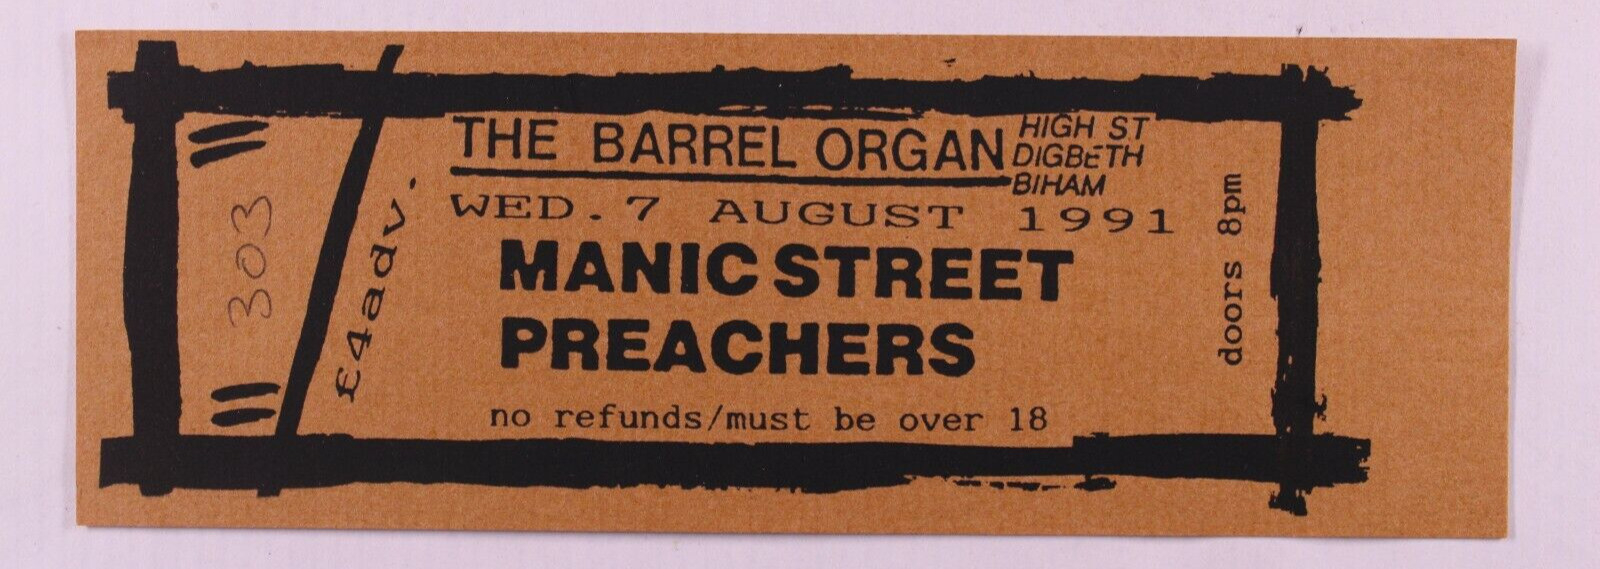 Manic Street Preachers Ticket Original Vintage The Barrel Organ Birmingham 1991